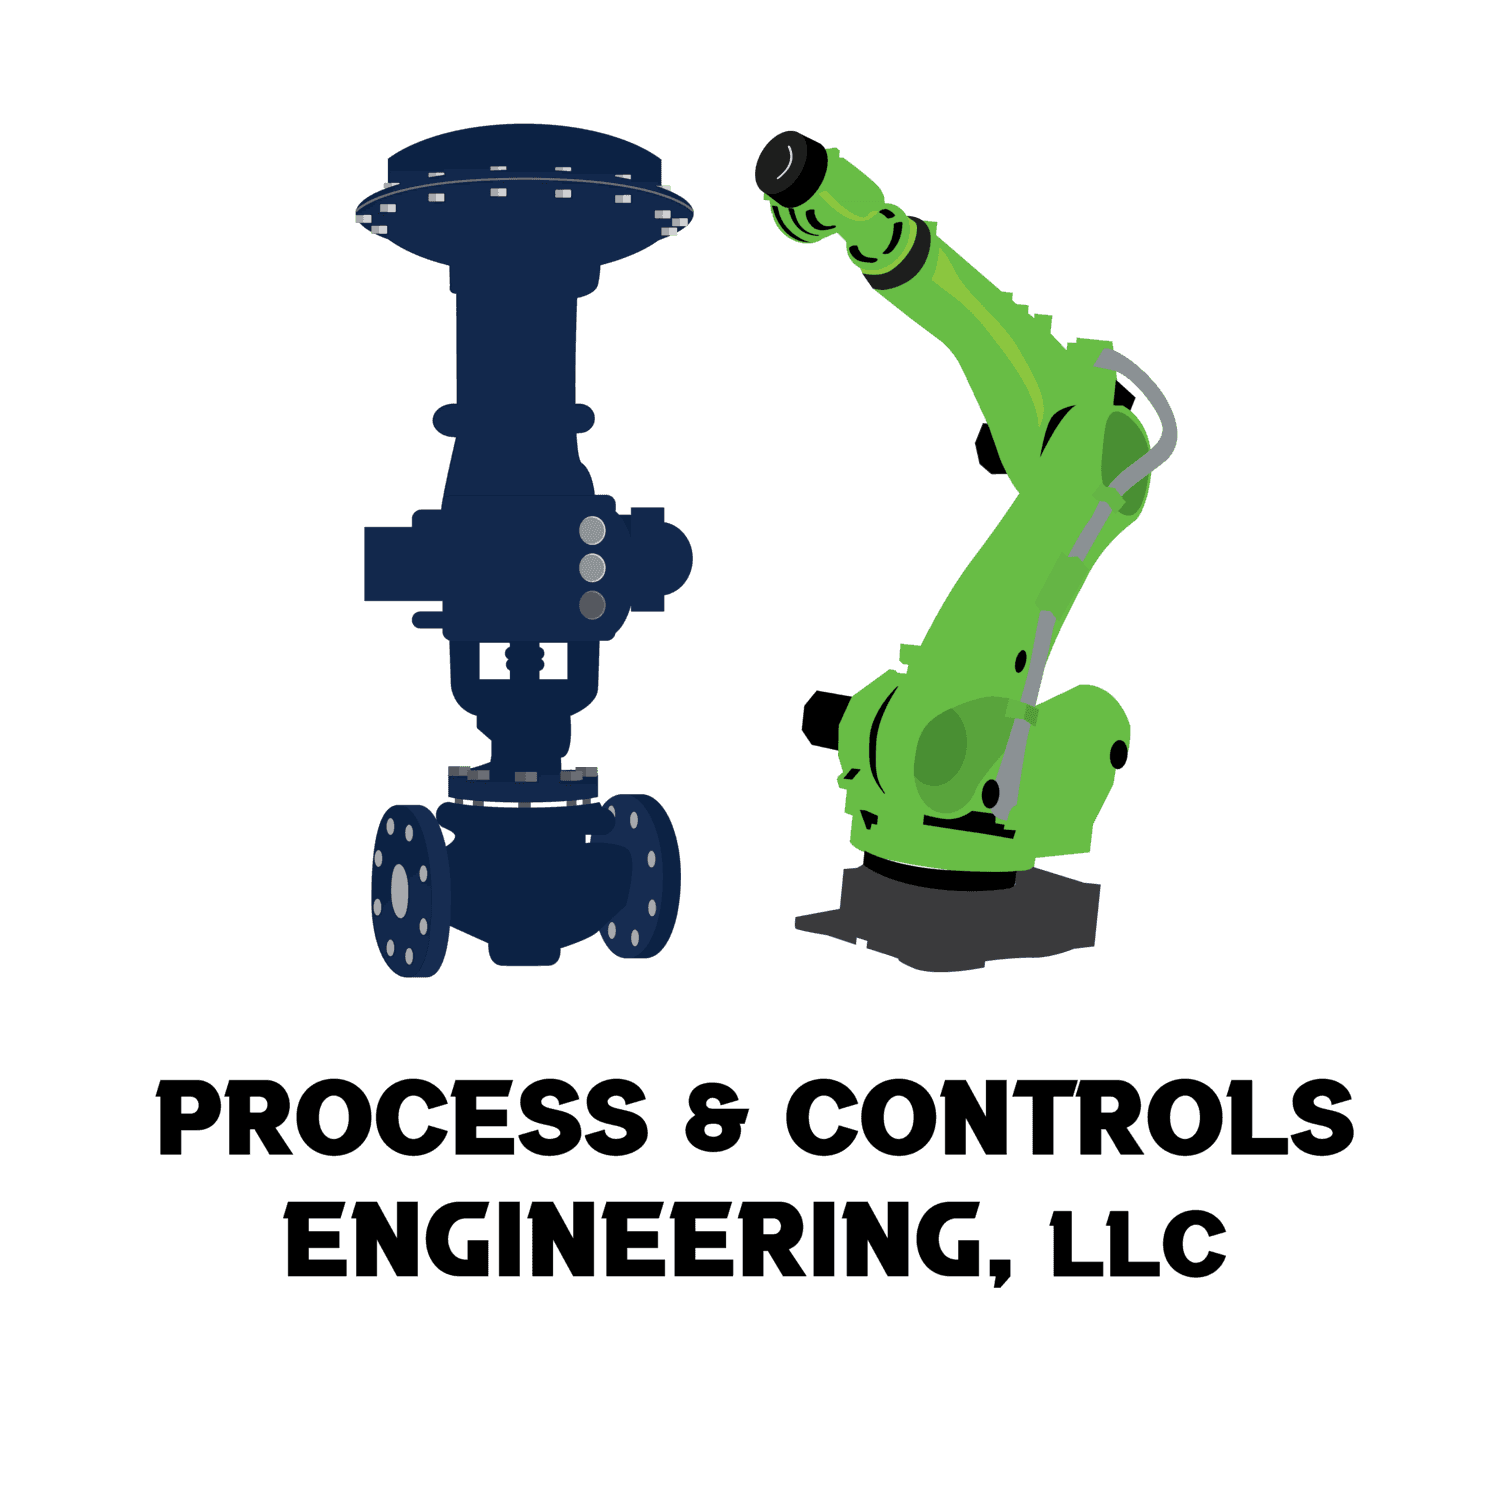 Process & Controls Engineering